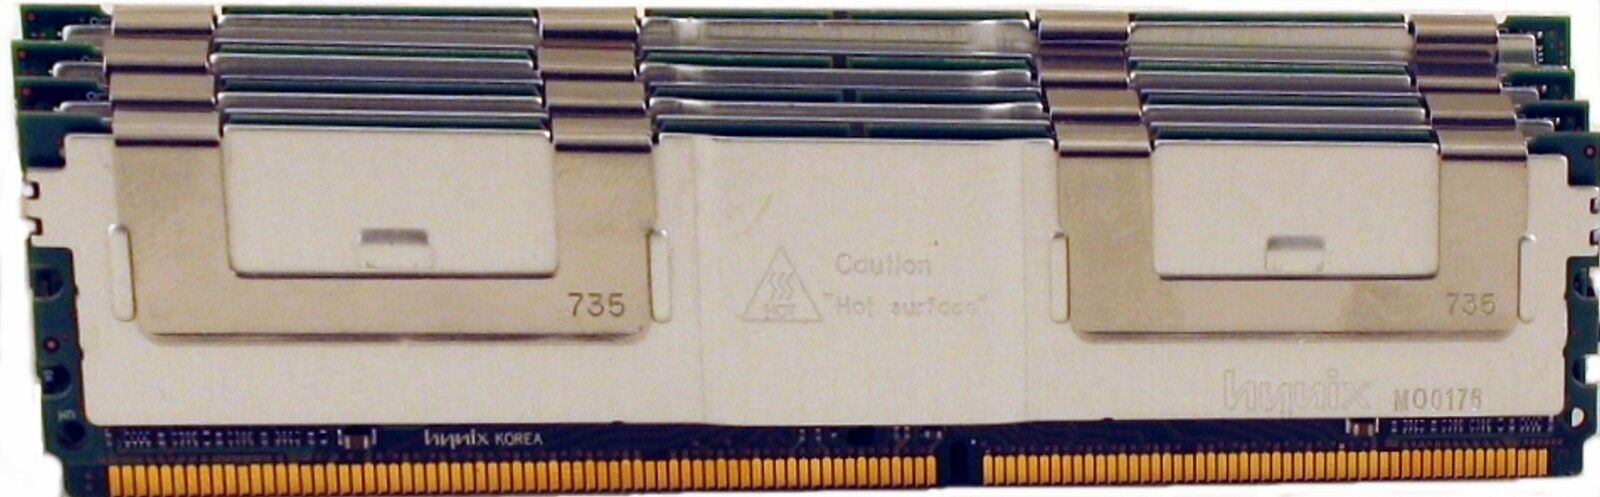 16GB(4x4GB) DIMMS For Dell Precision Workstation 490, 690, t5400, t7400 & R5400